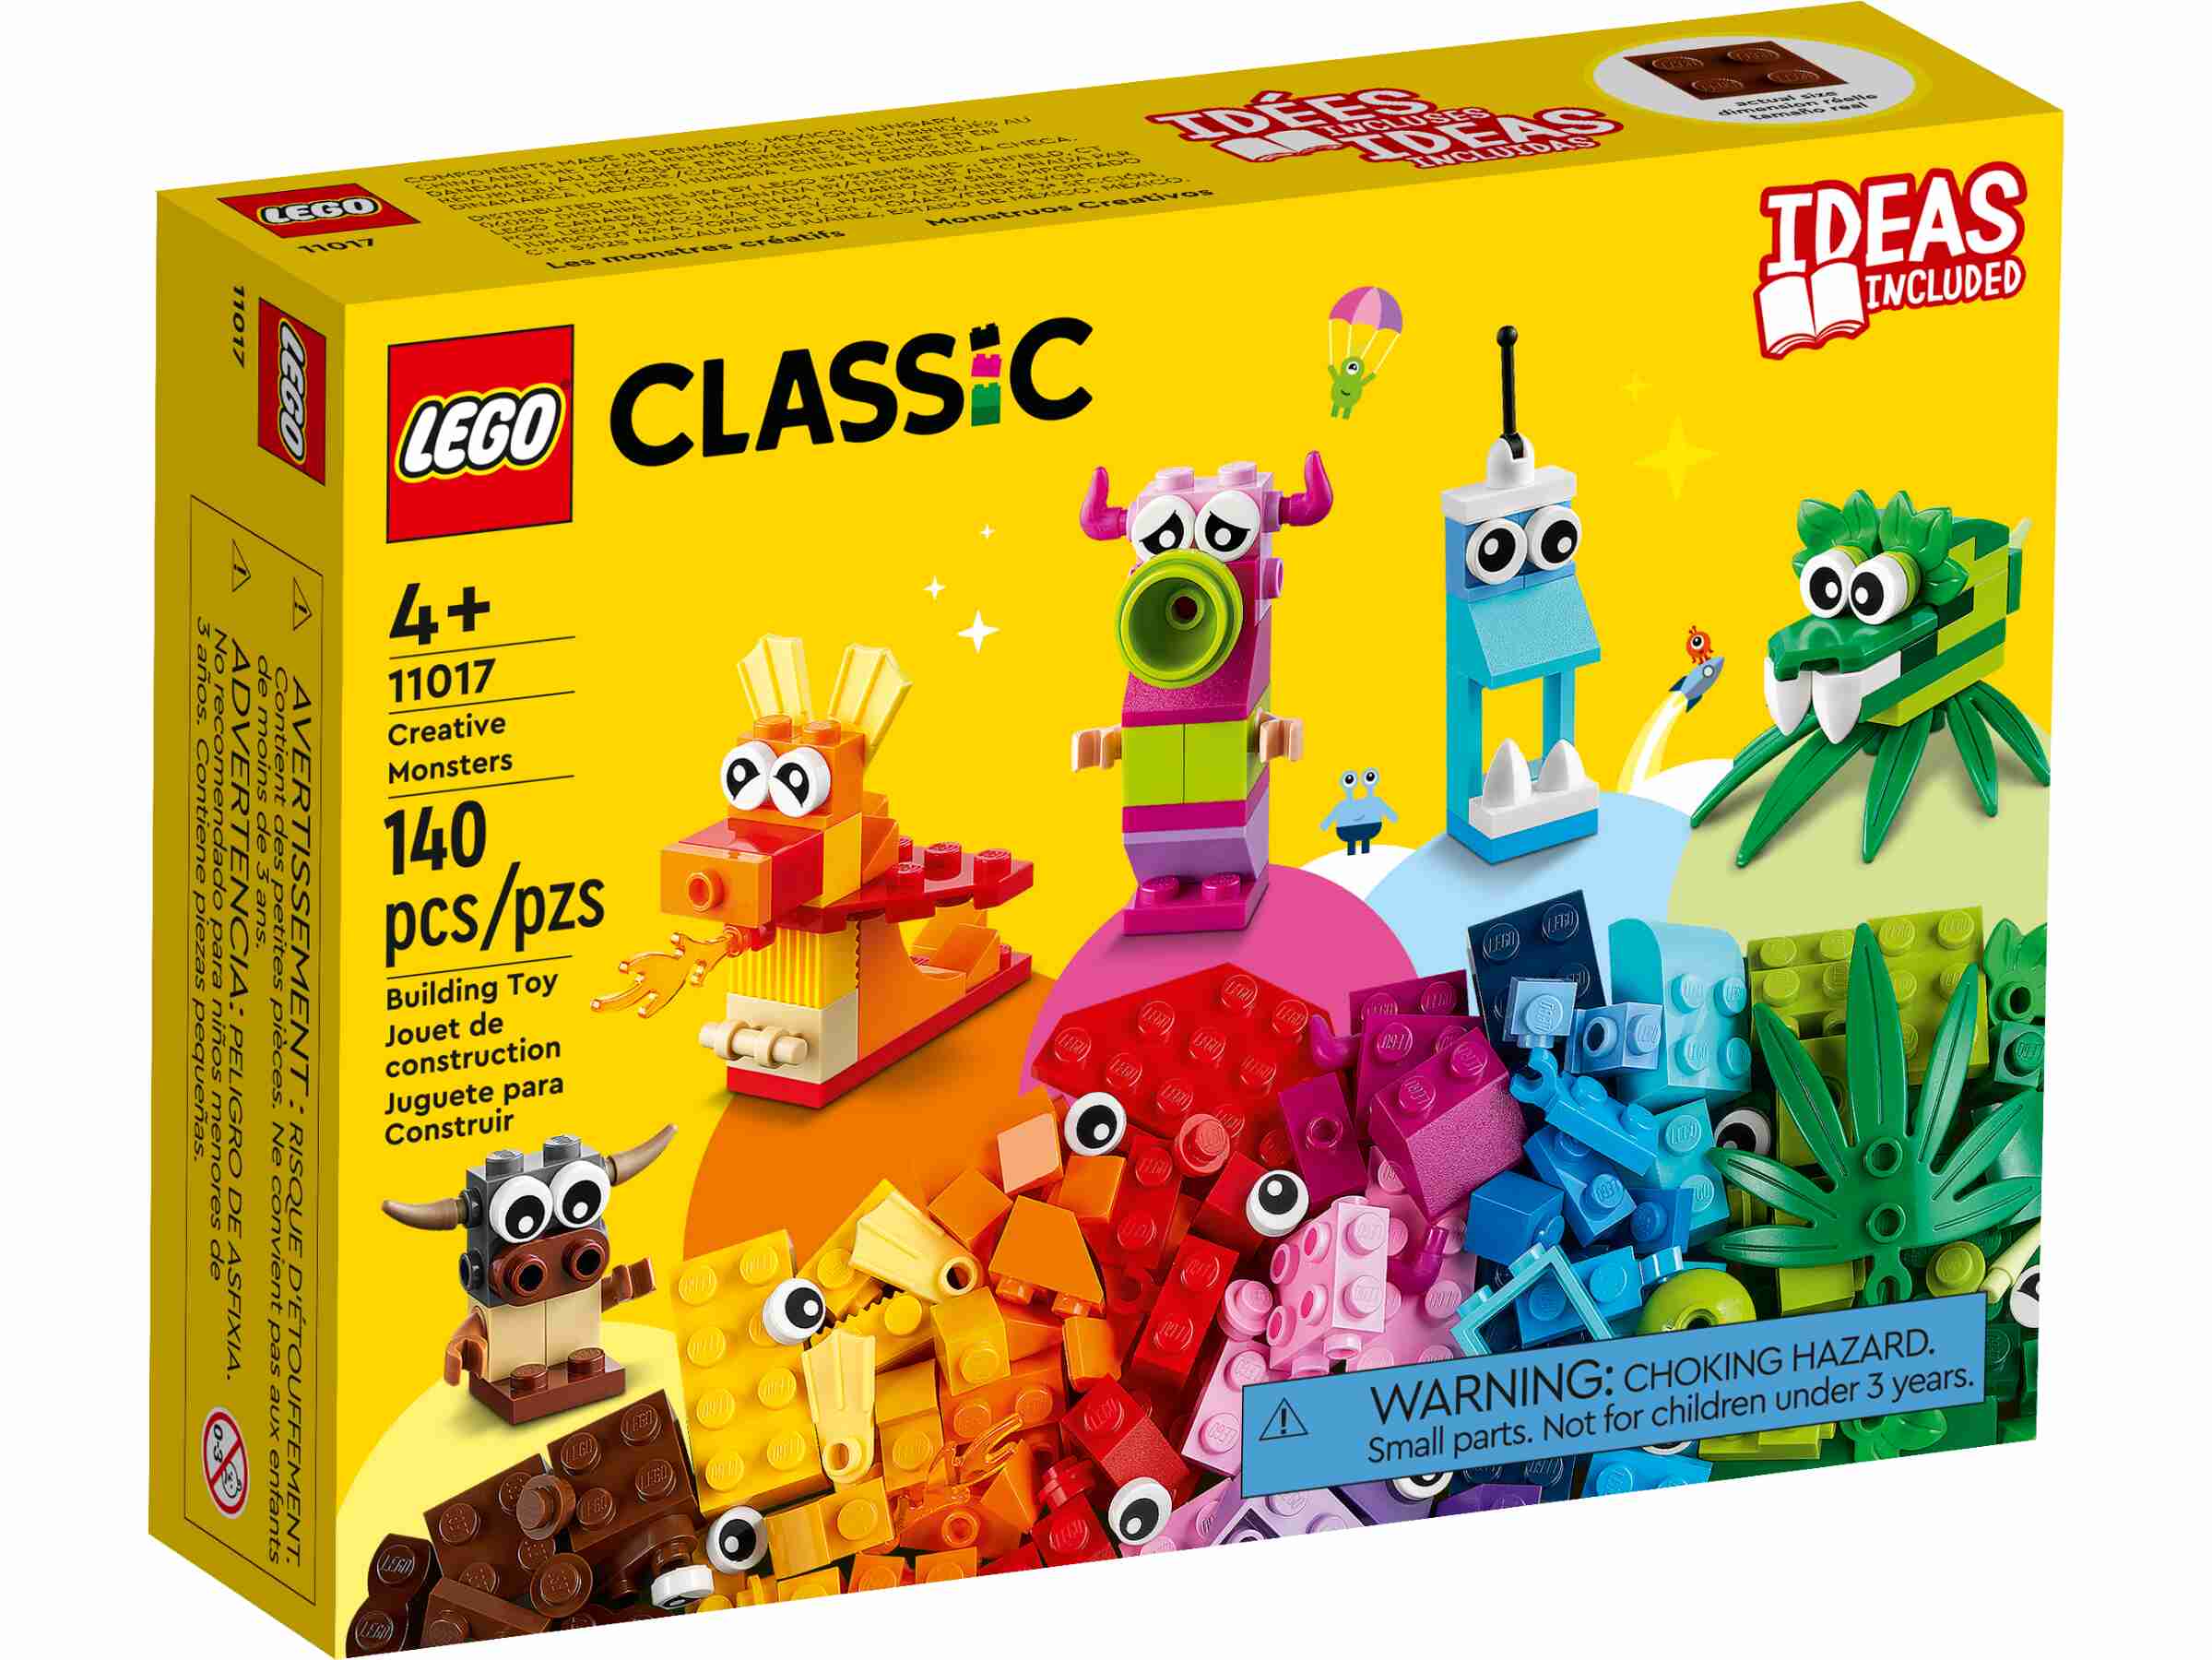 11017 toy Classic Monsters, build monster 5 Lobigo.co.uk: Toys Creative ideas: LEGO